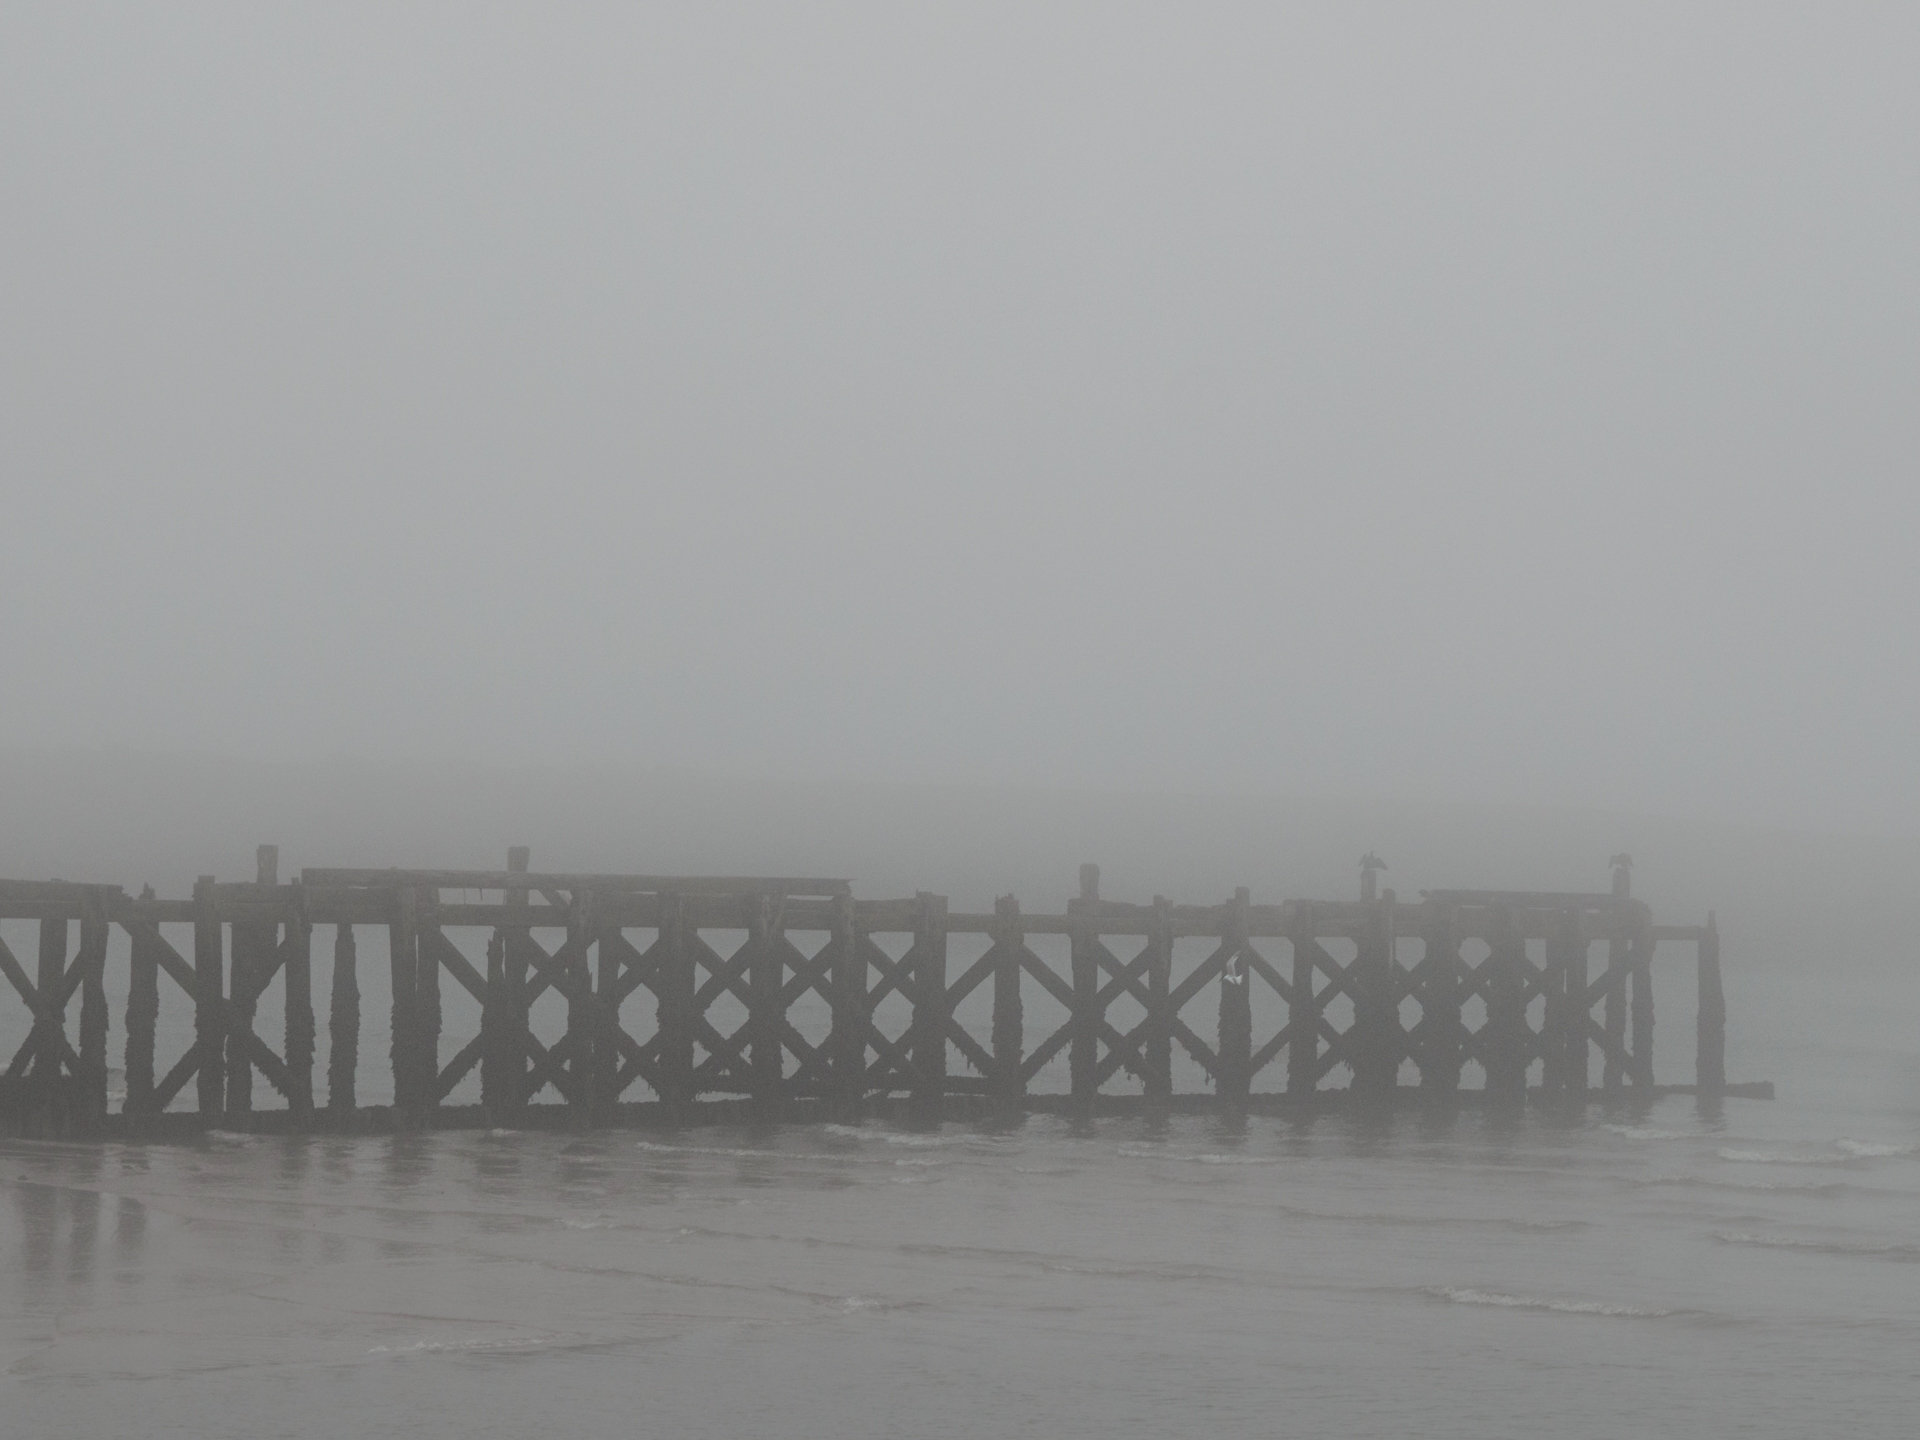 North Pier, shrouded in fog